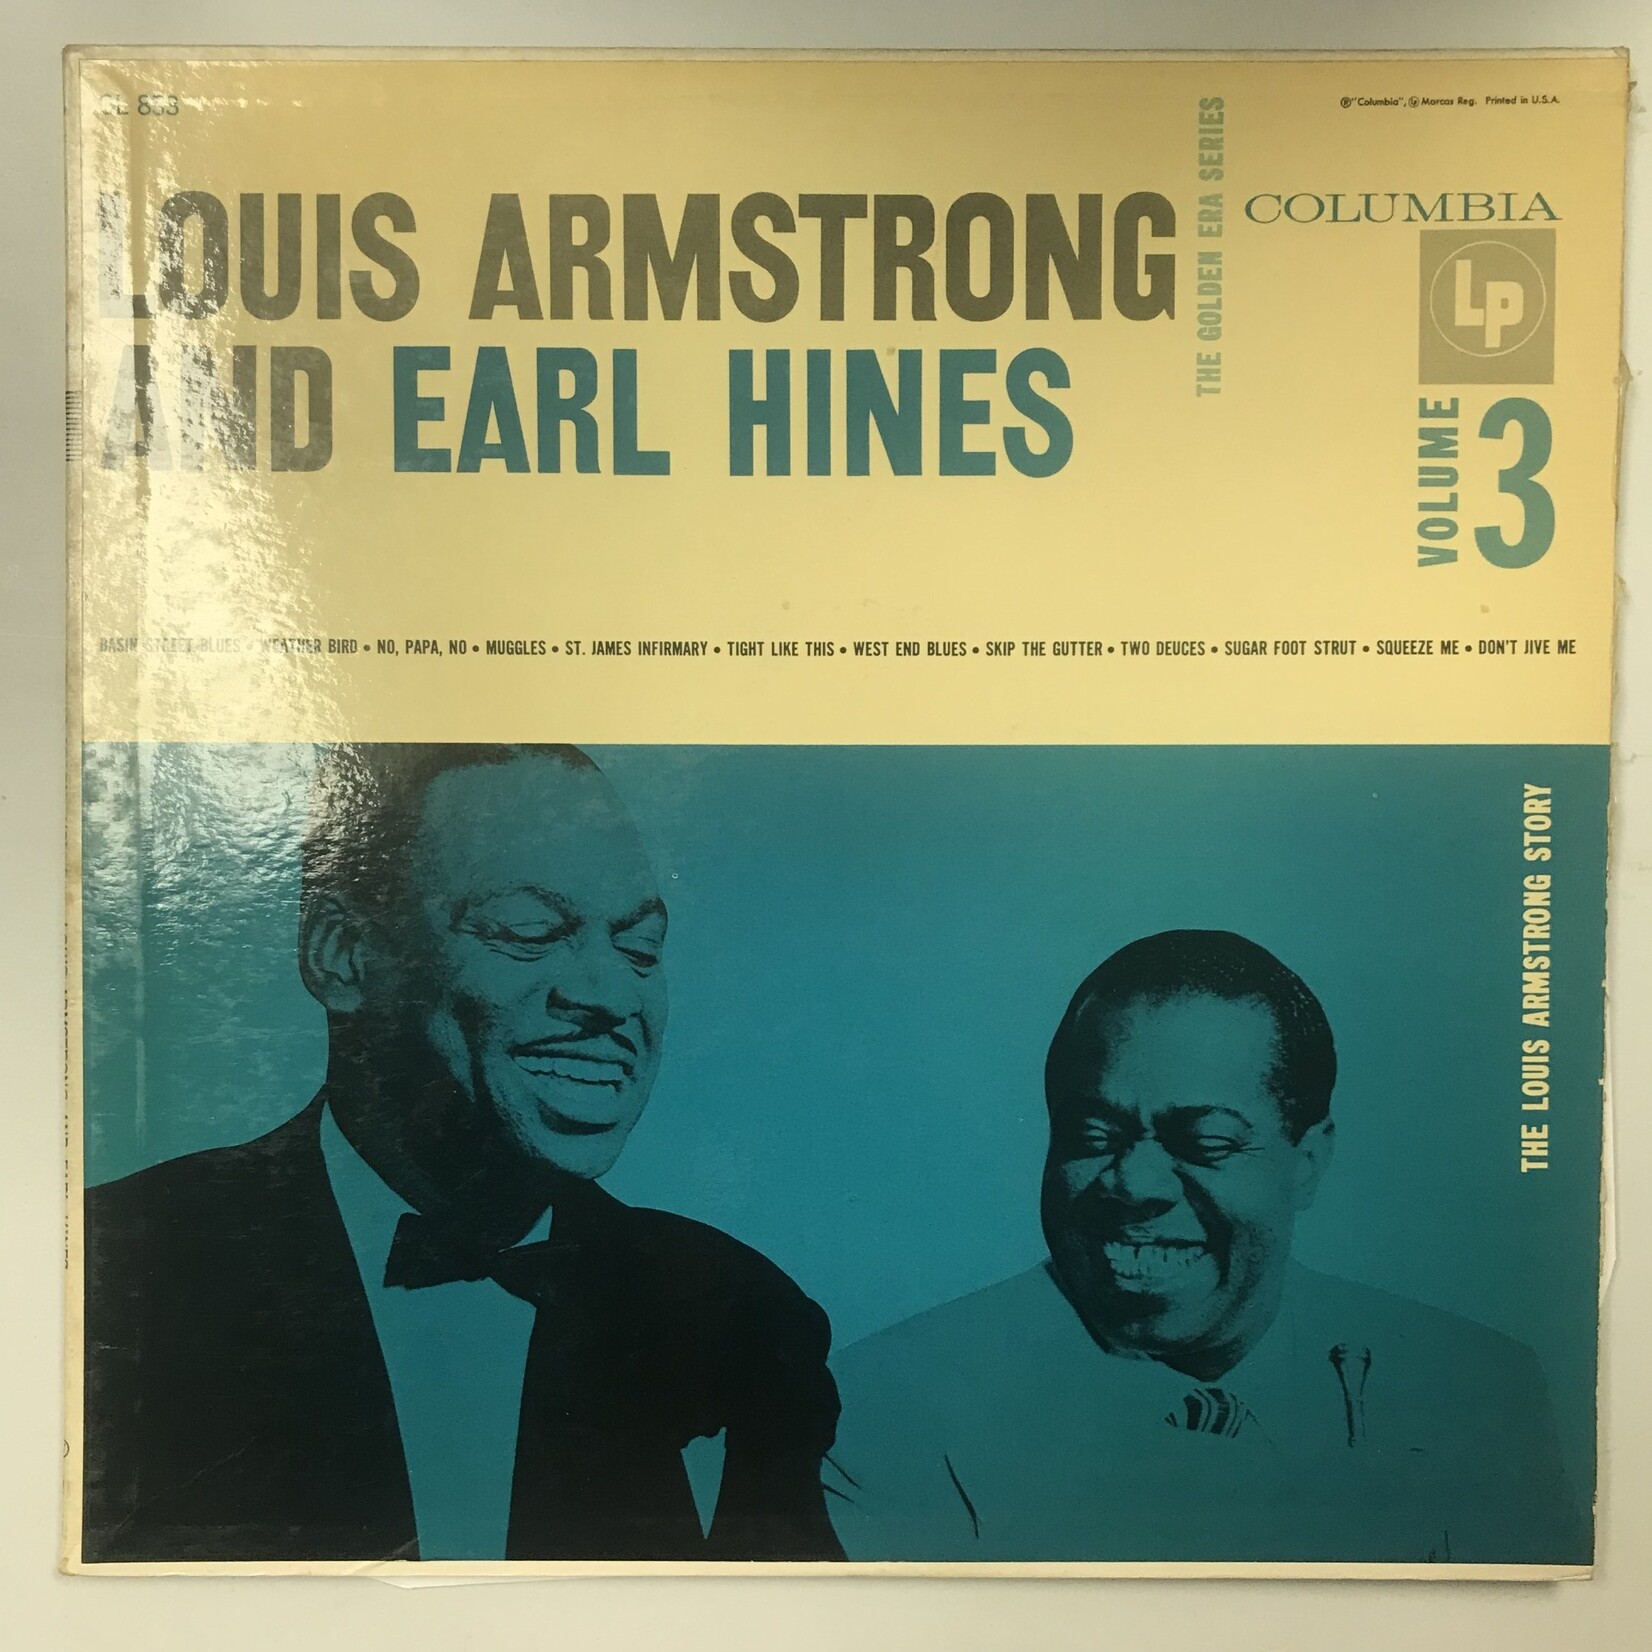 Louis Armstrong, Earl Hines - Vol. 3 - CL 853 - Vinyl LP (USED)